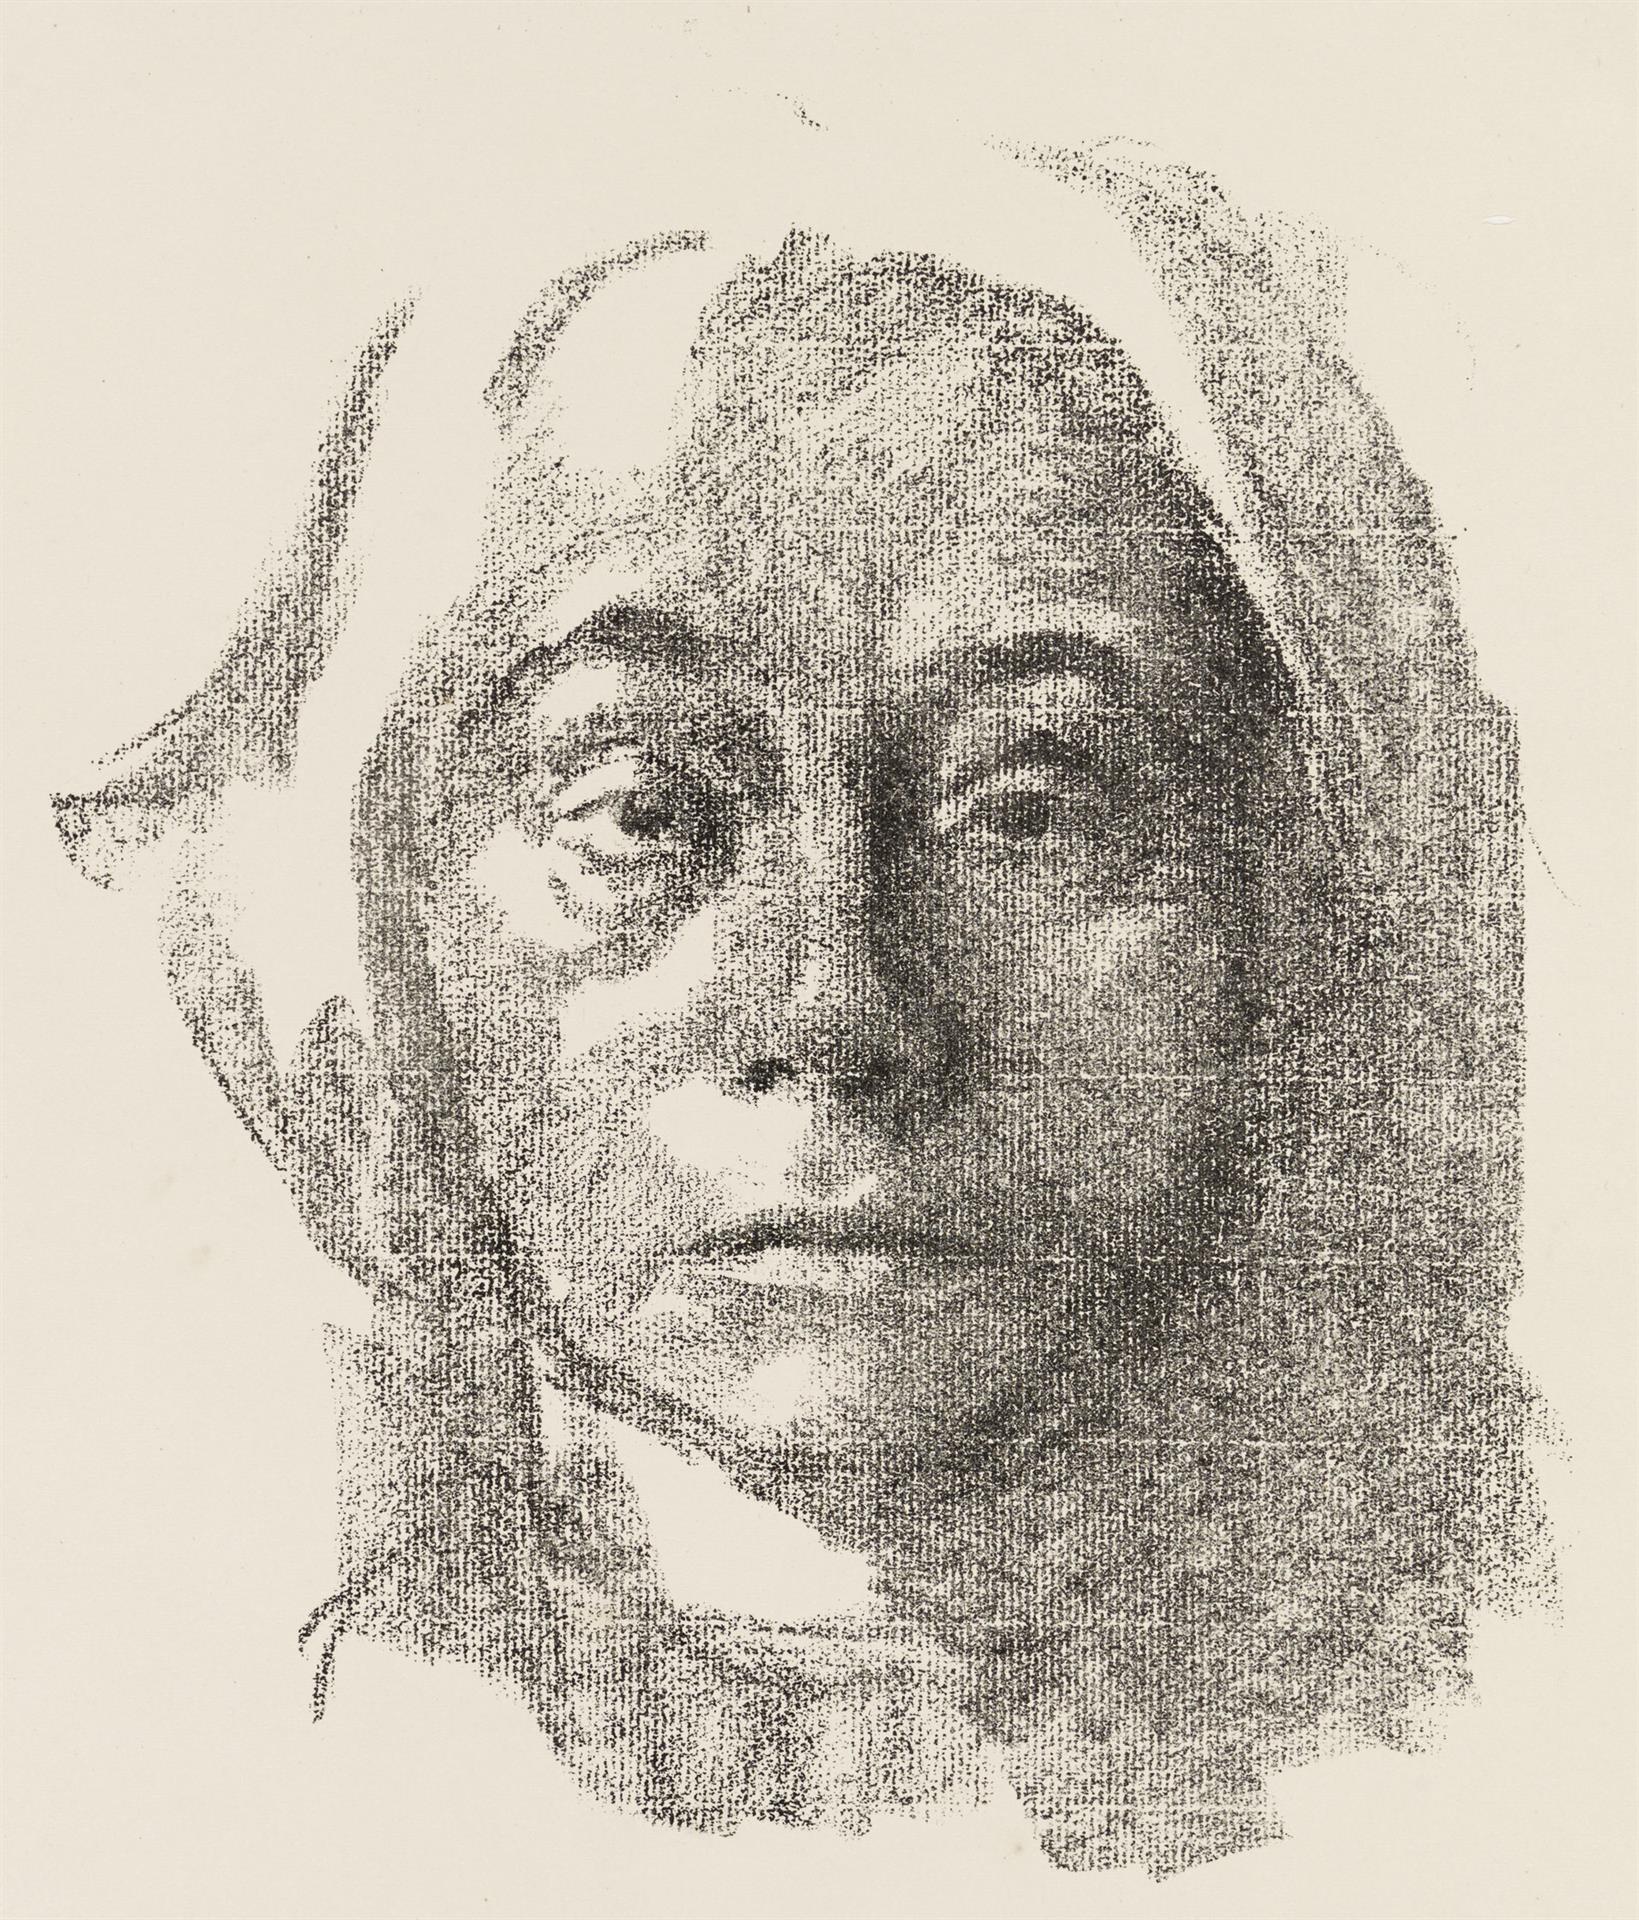 Käthe Kollwitz, Self-portrait, 1915, crayon lithograph (transfer), Kn 134 c, Cologne Kollwitz Collection © Käthe Kollwitz Museum Köln